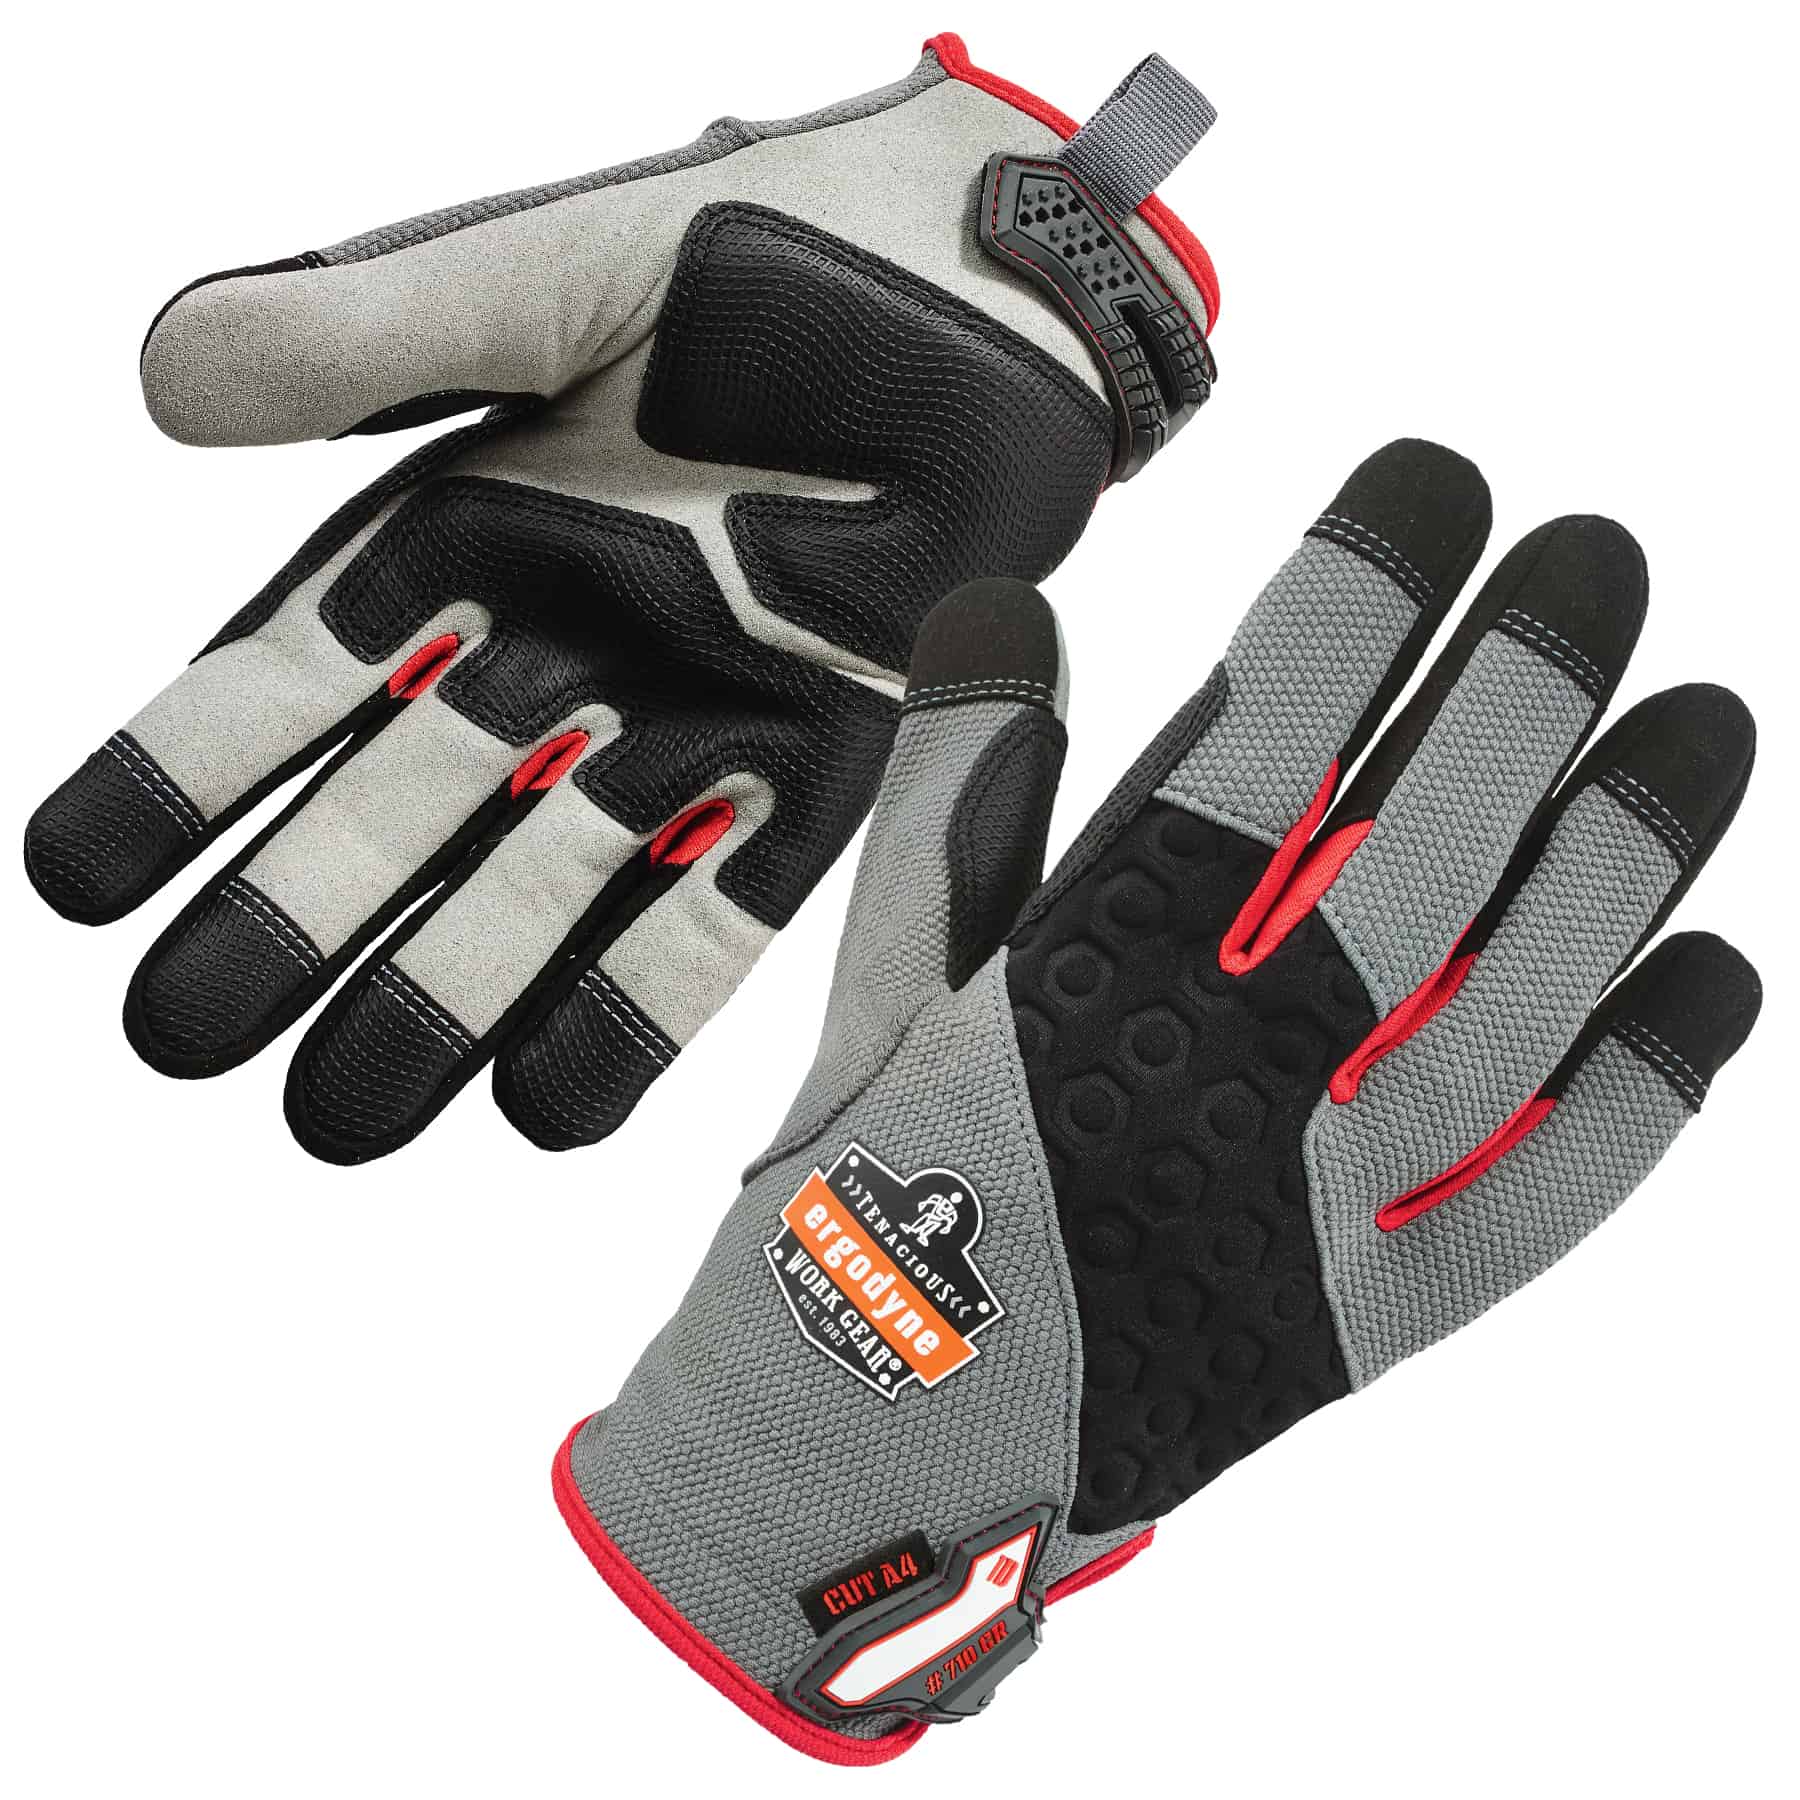 https://www.ergodyne.com/sites/default/files/product-images/17122-710cr-heavy-duty-cut-resistance-gloves-pair.jpg